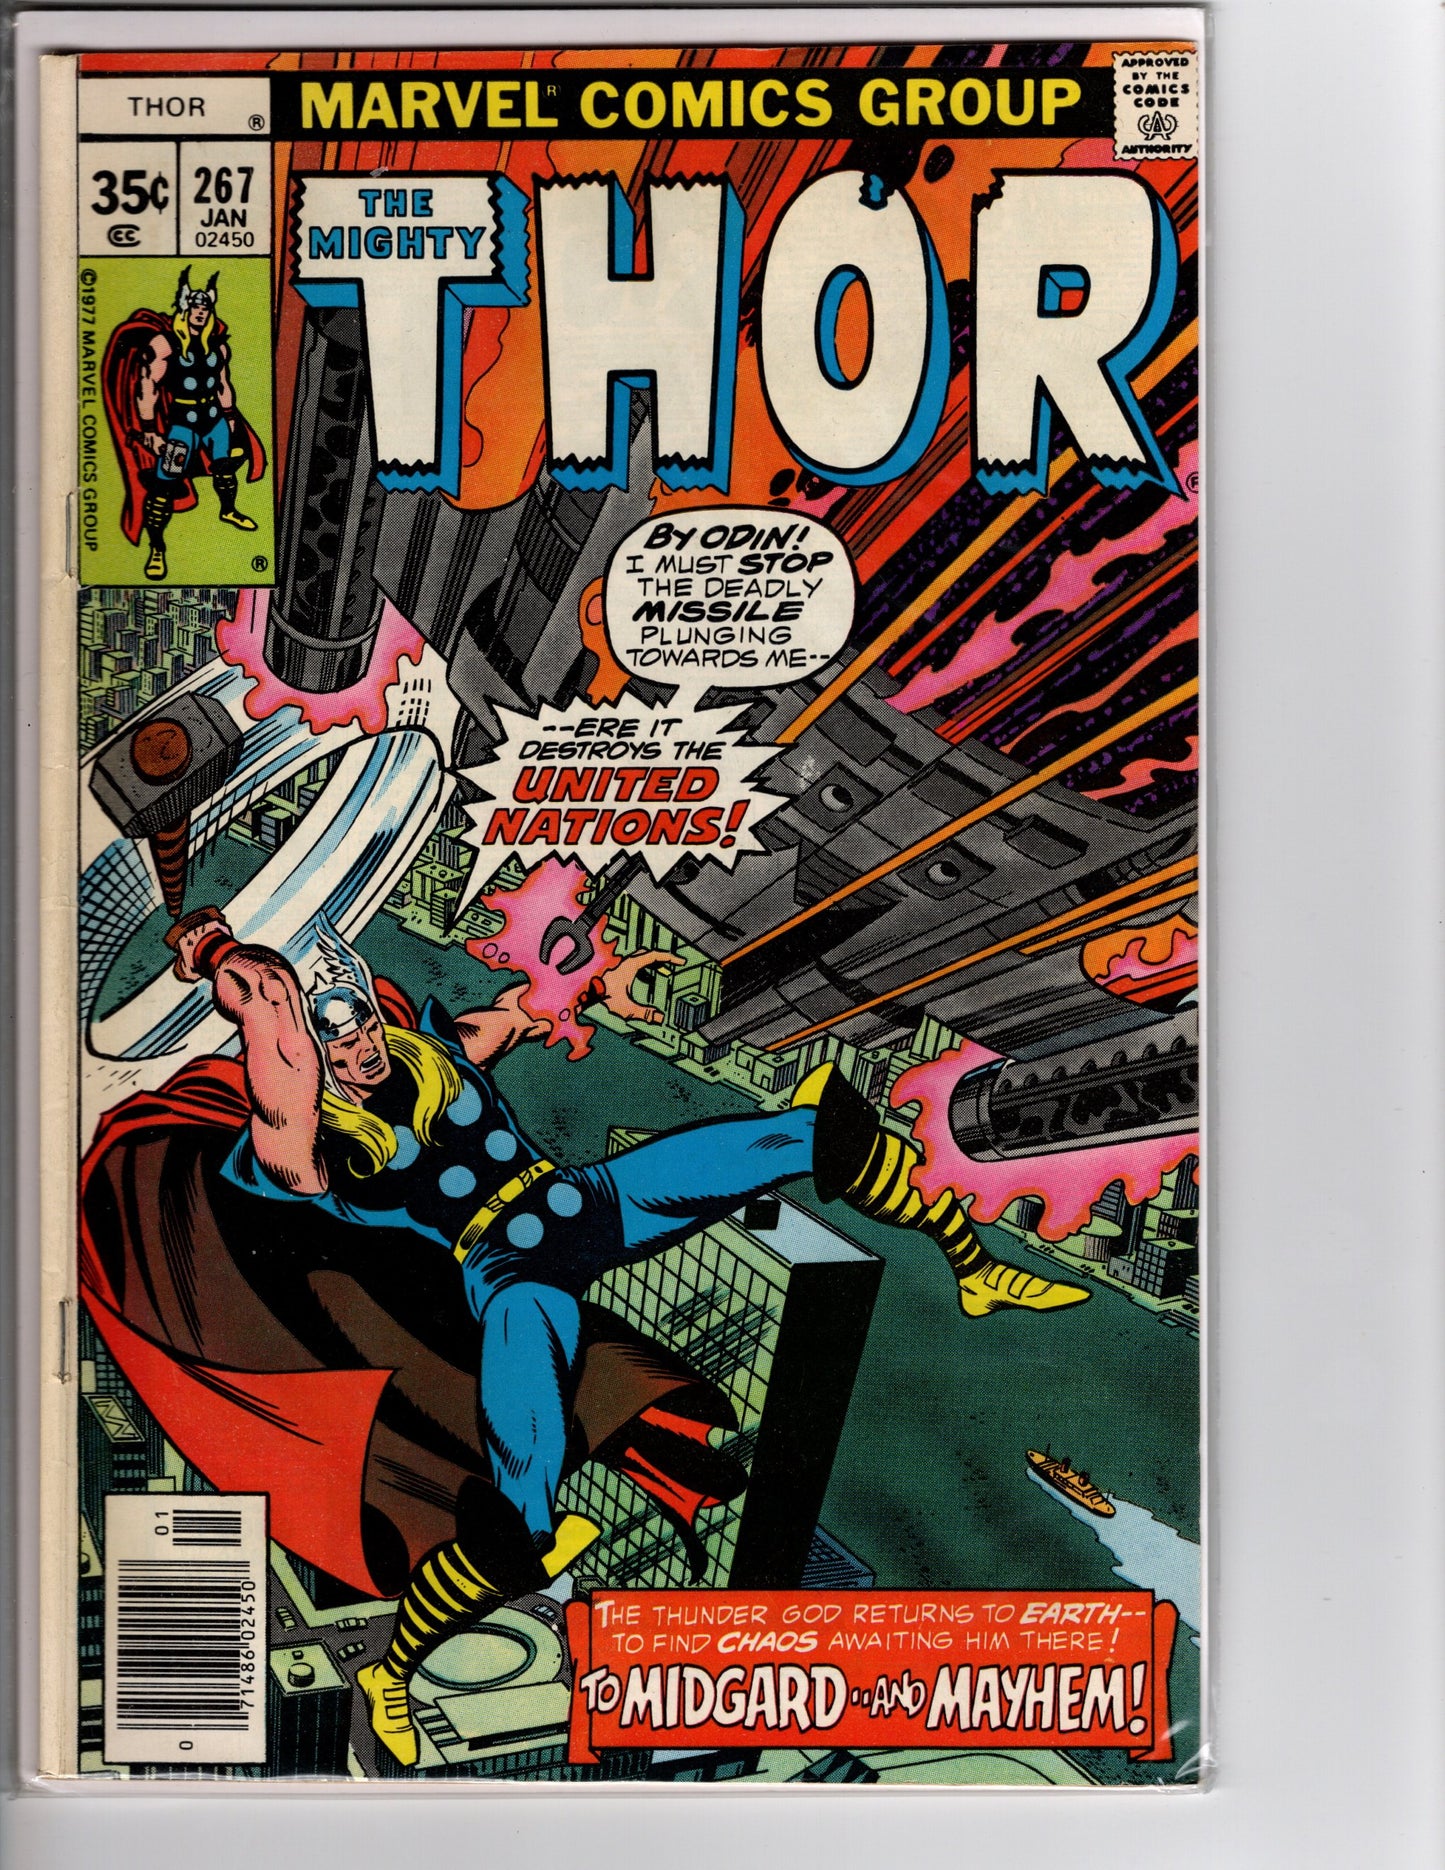 Thor #267